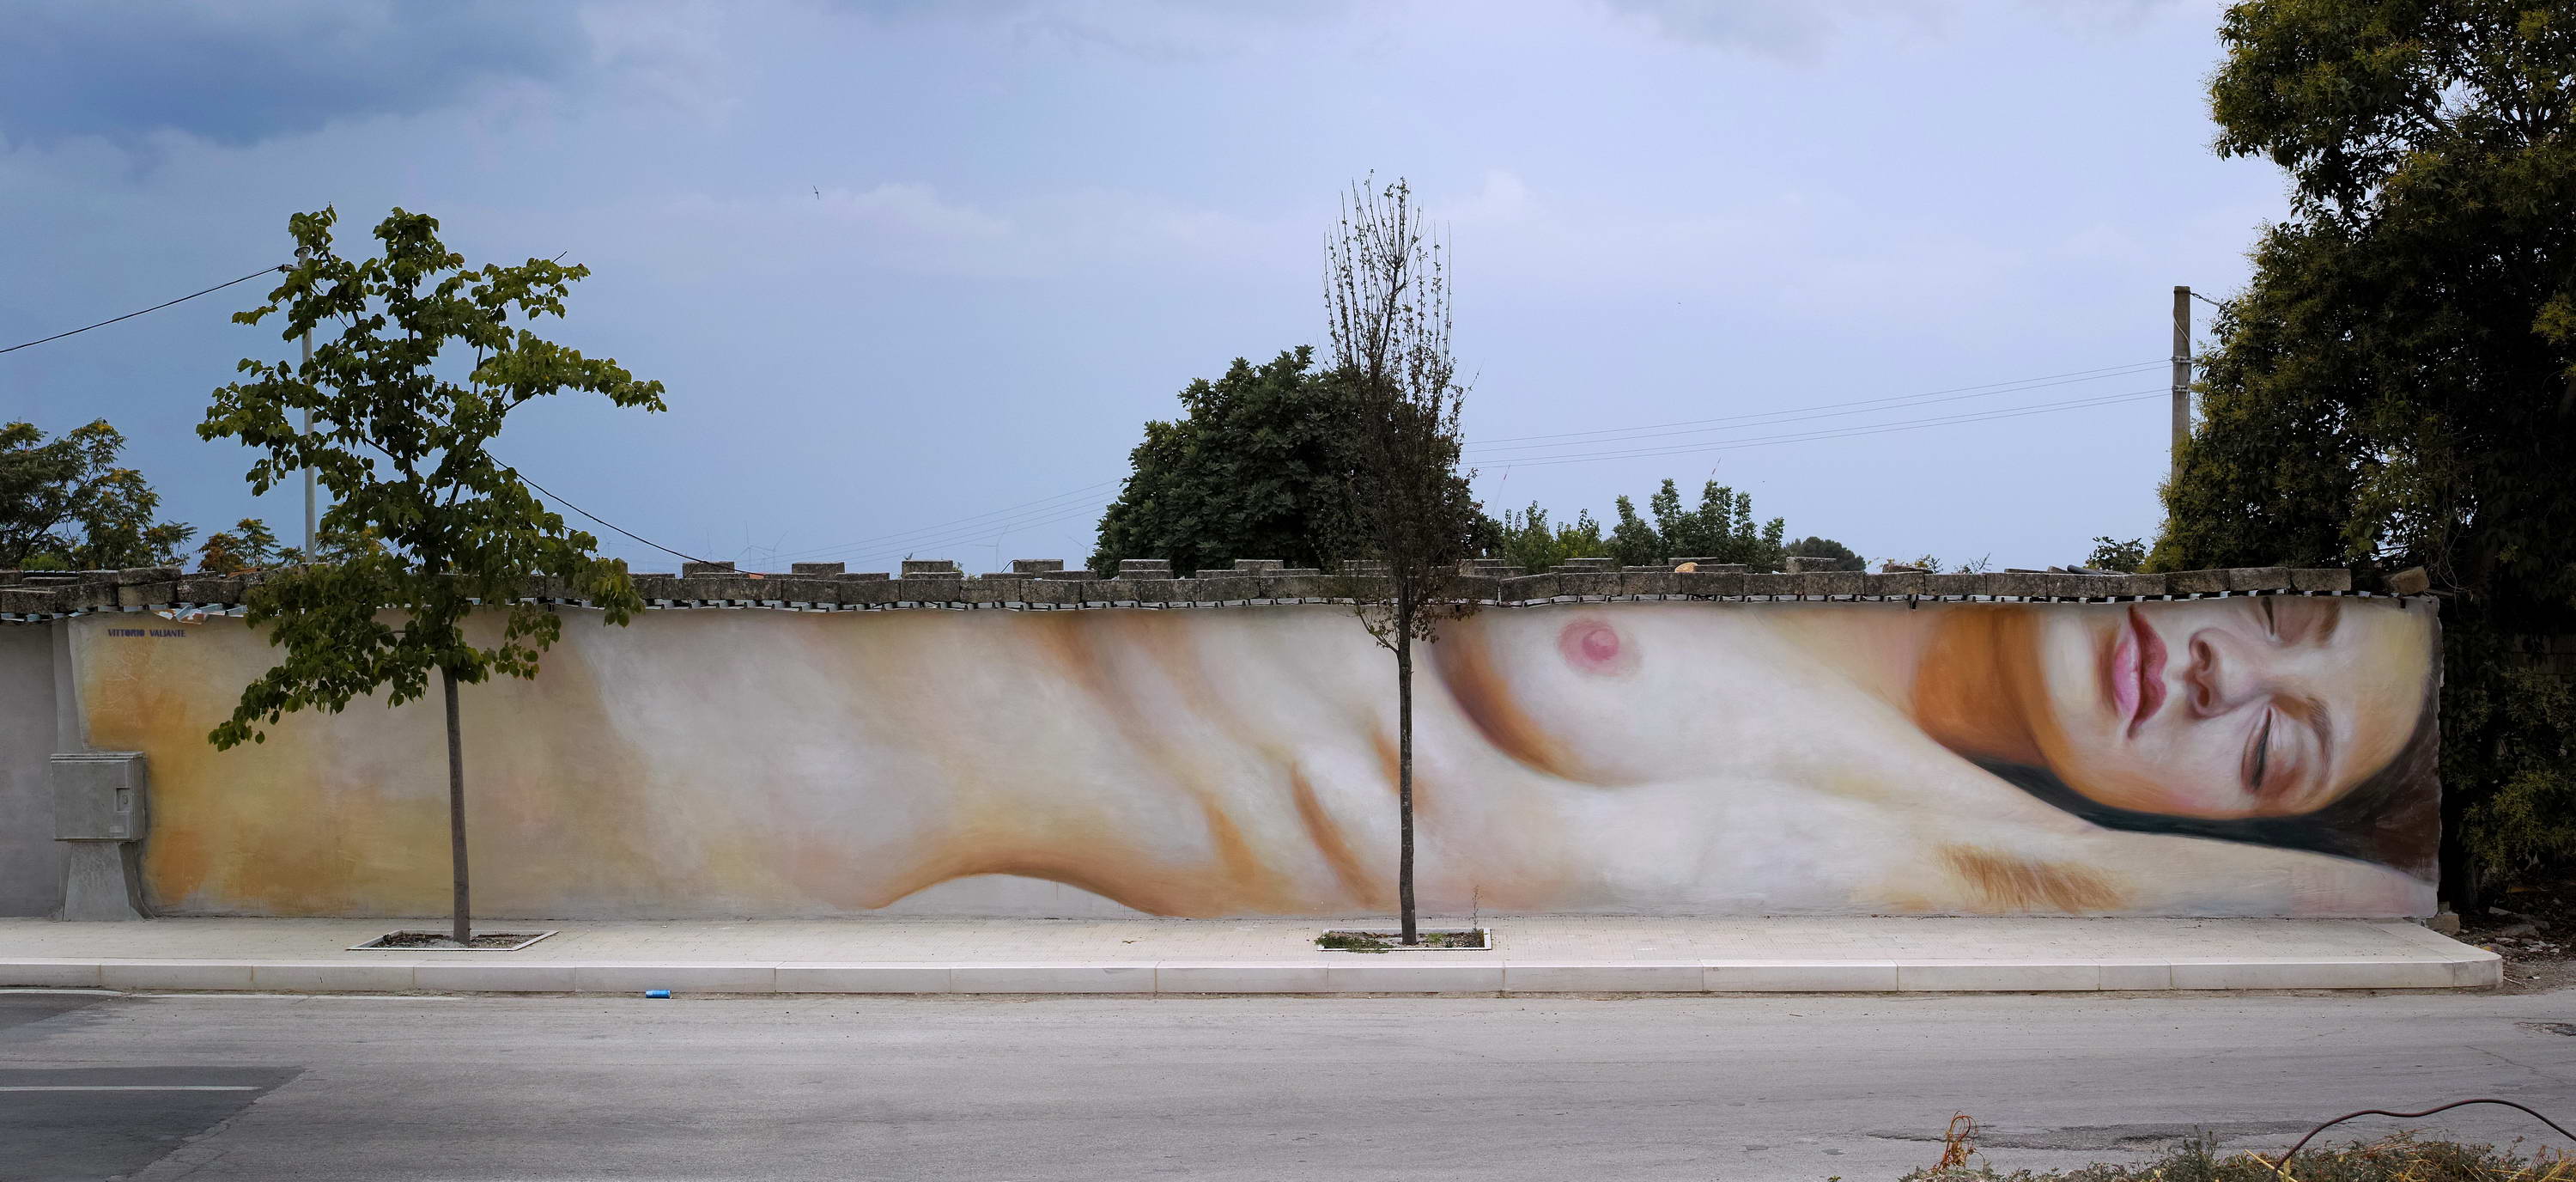 Graffiti 5842 Donna sdraiata captured by stramurales in Stornara Italy